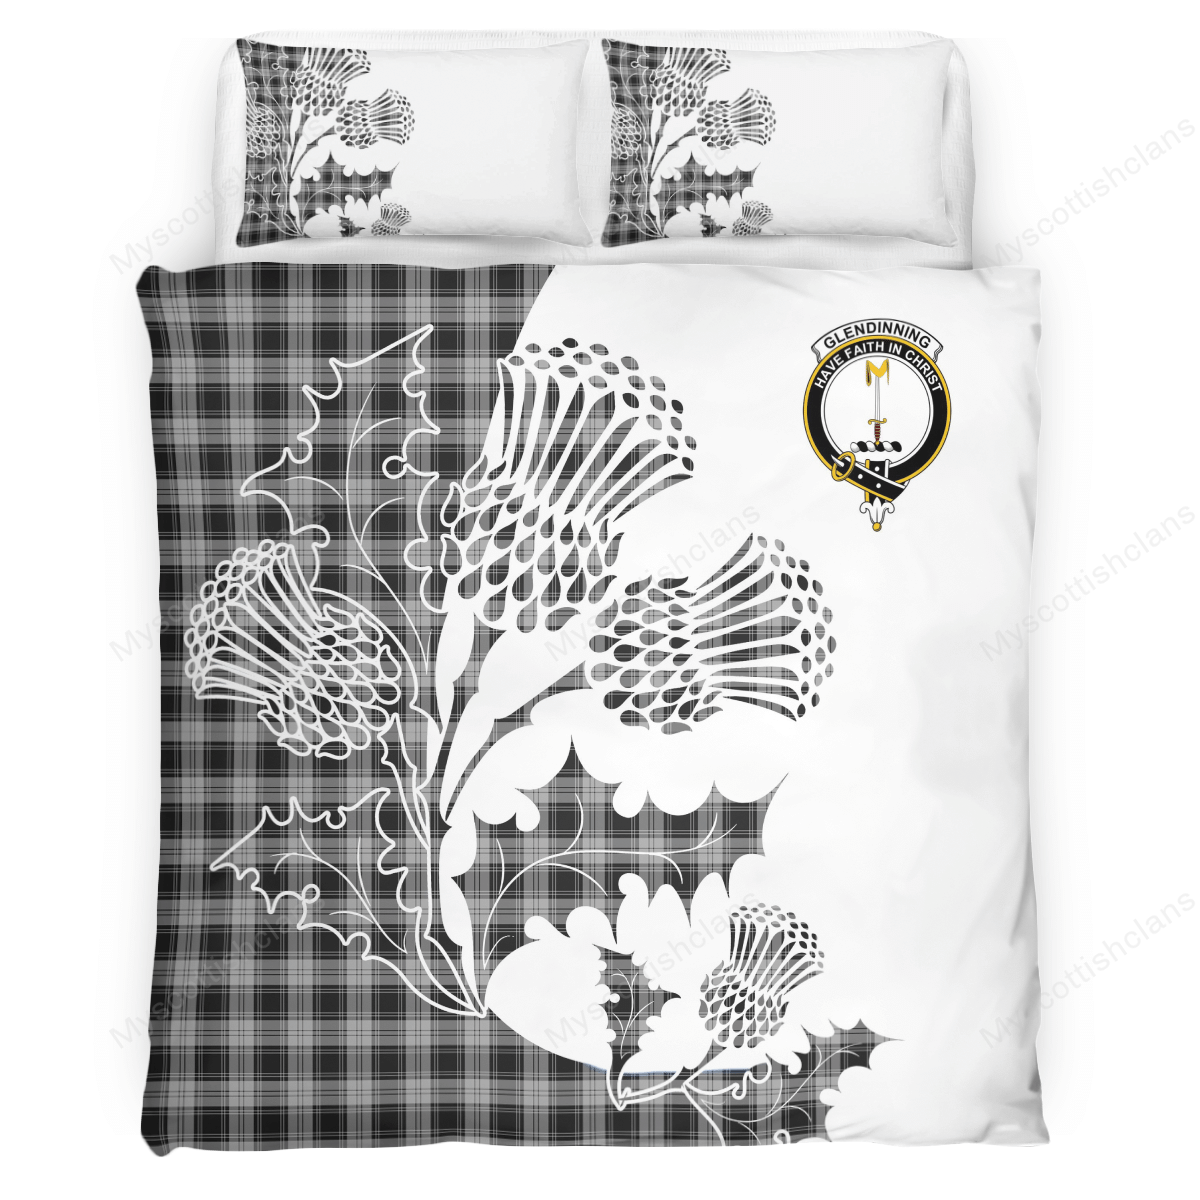 Glendinning Tartan Crest Bedding Set - Thistle Style